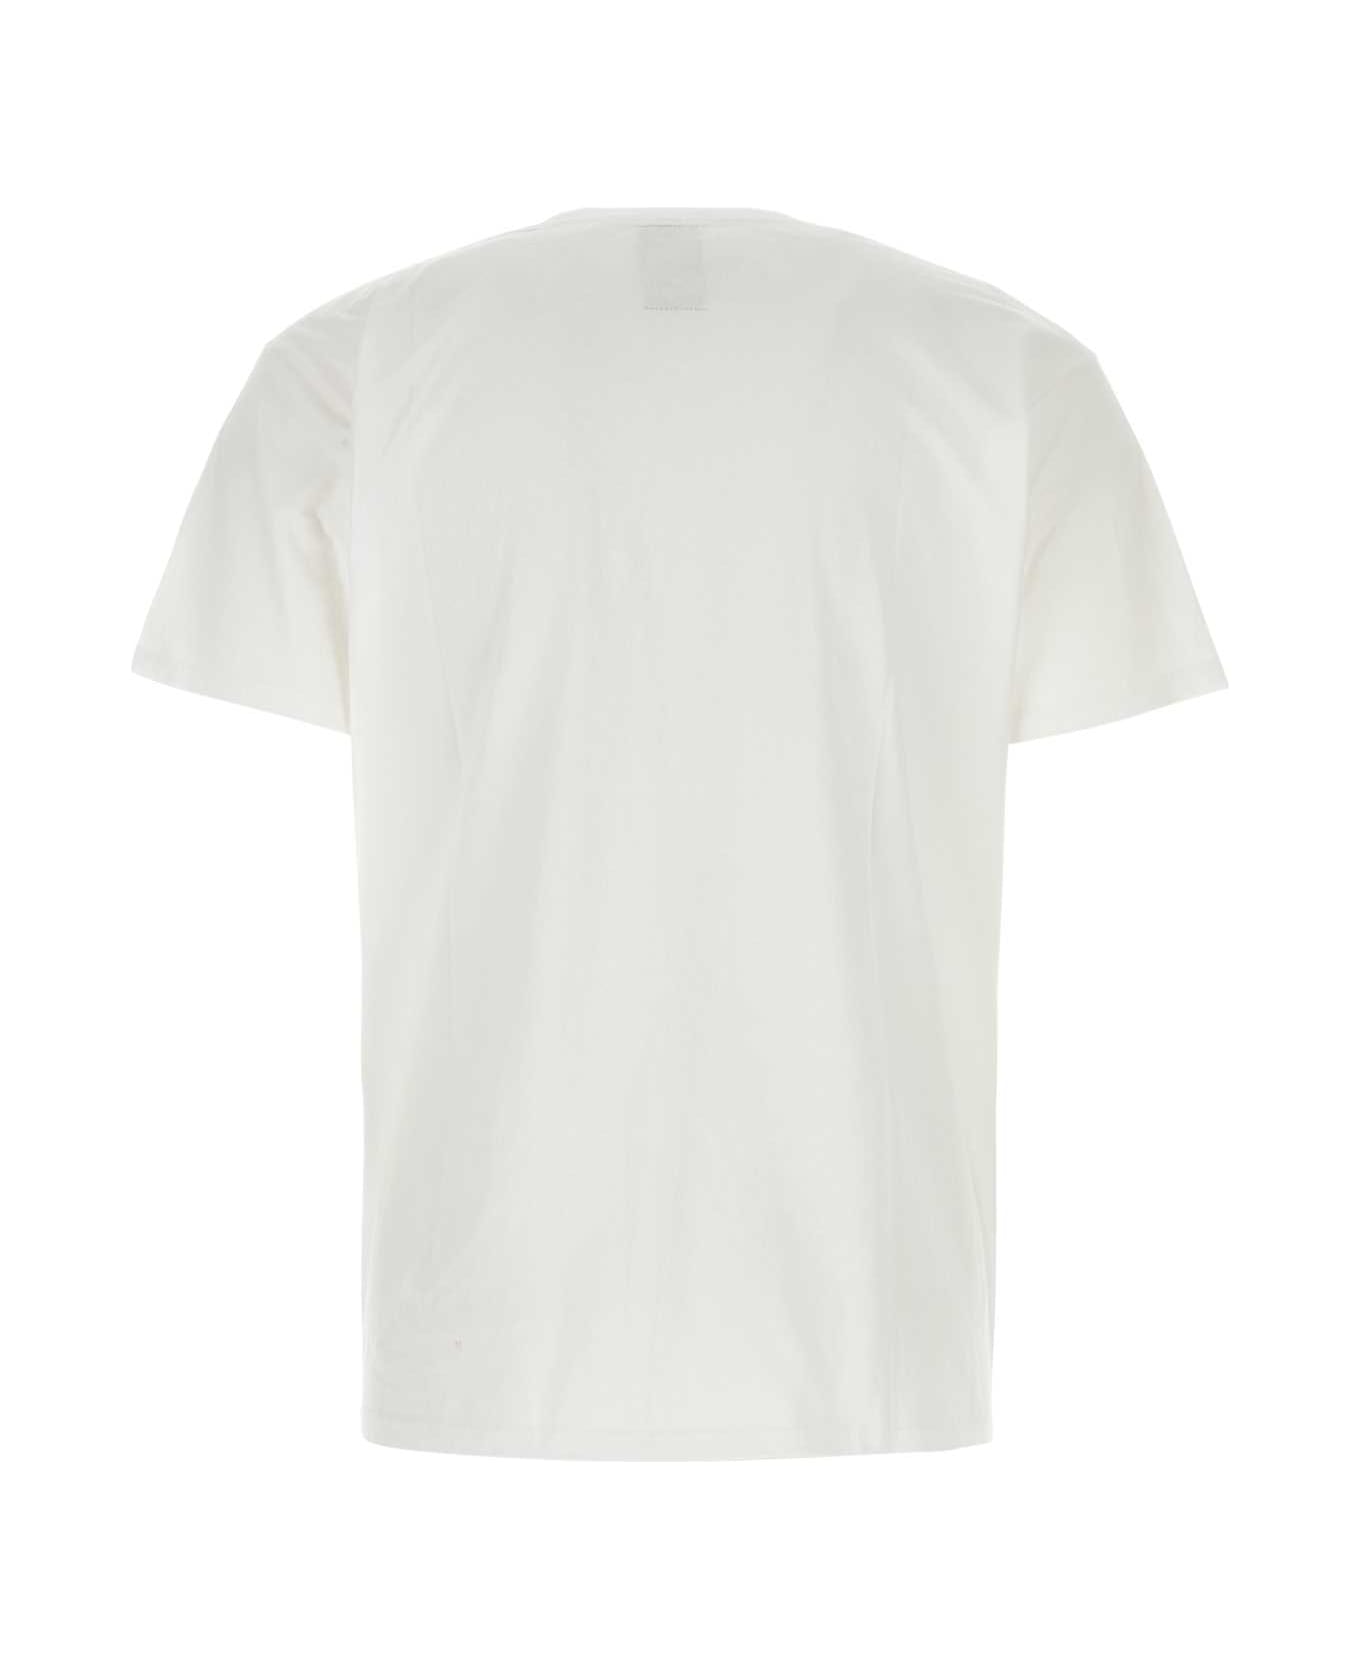 Wild Donkey White Cotton T-shirt - WD018 Tシャツ